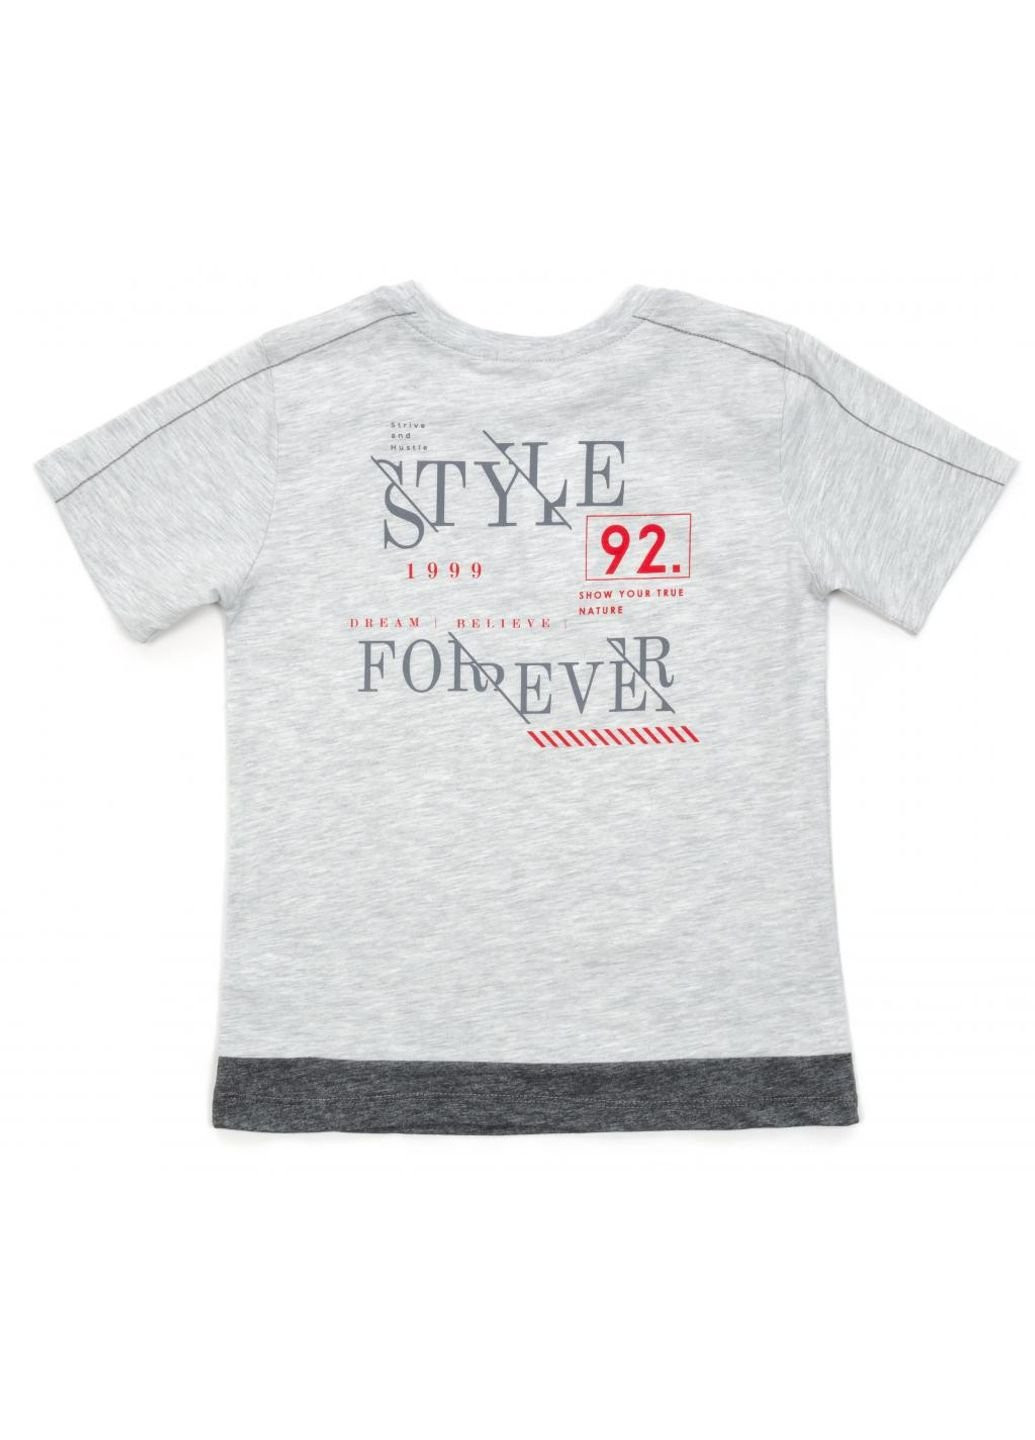 Сіра демісезонна футболка дитяча "style forever" (14535-128b-gray) Breeze